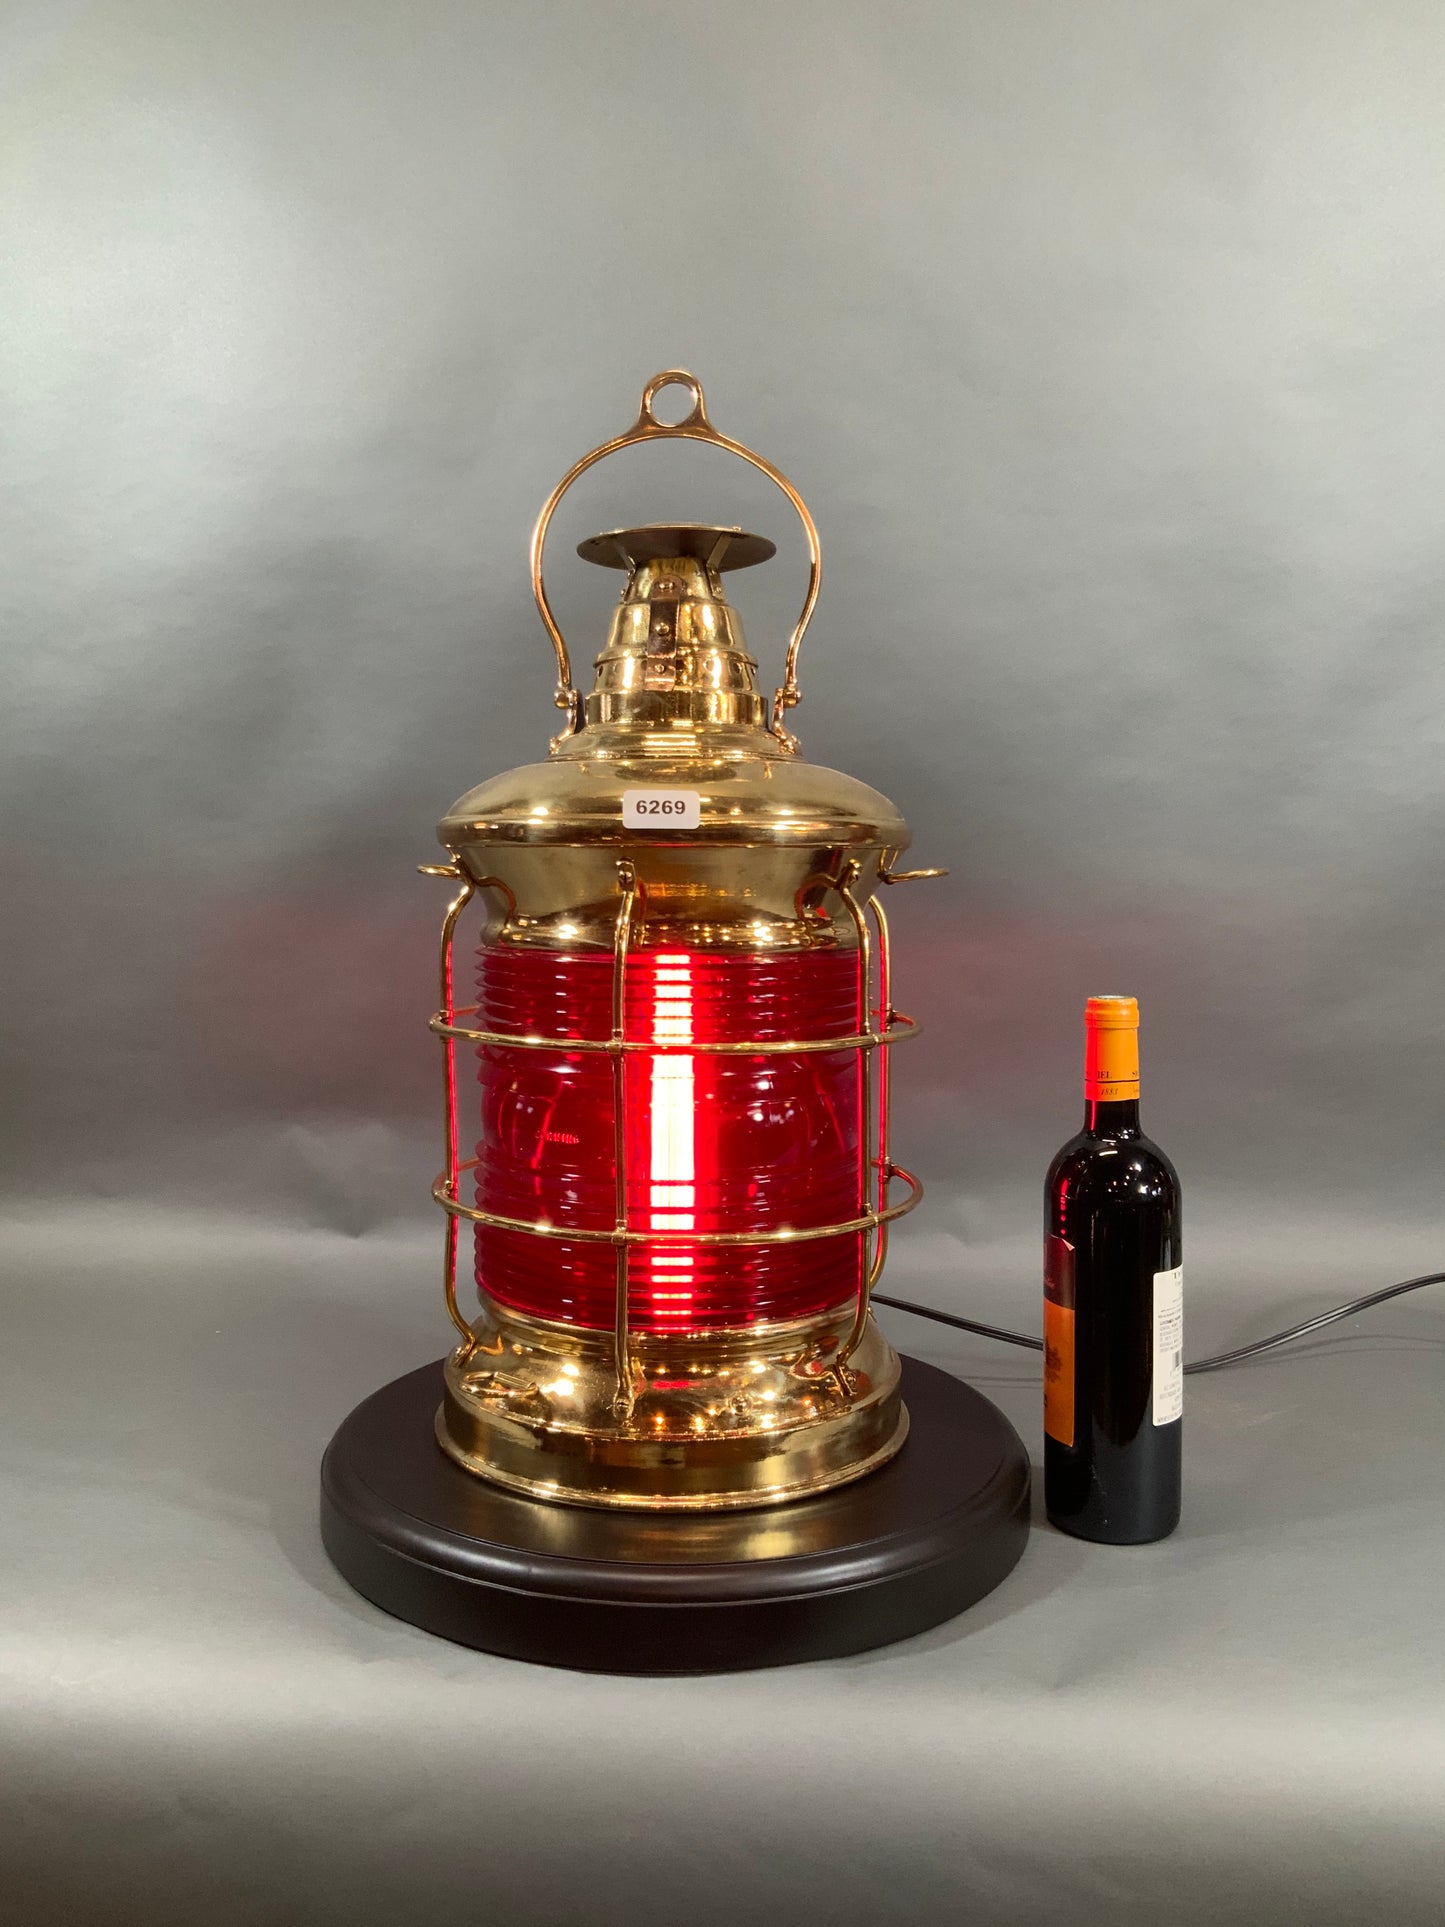 Solid Brass Ship's Lantern by F.H. Lovell Co. of Arlington, New Jersey - Lannan Gallery